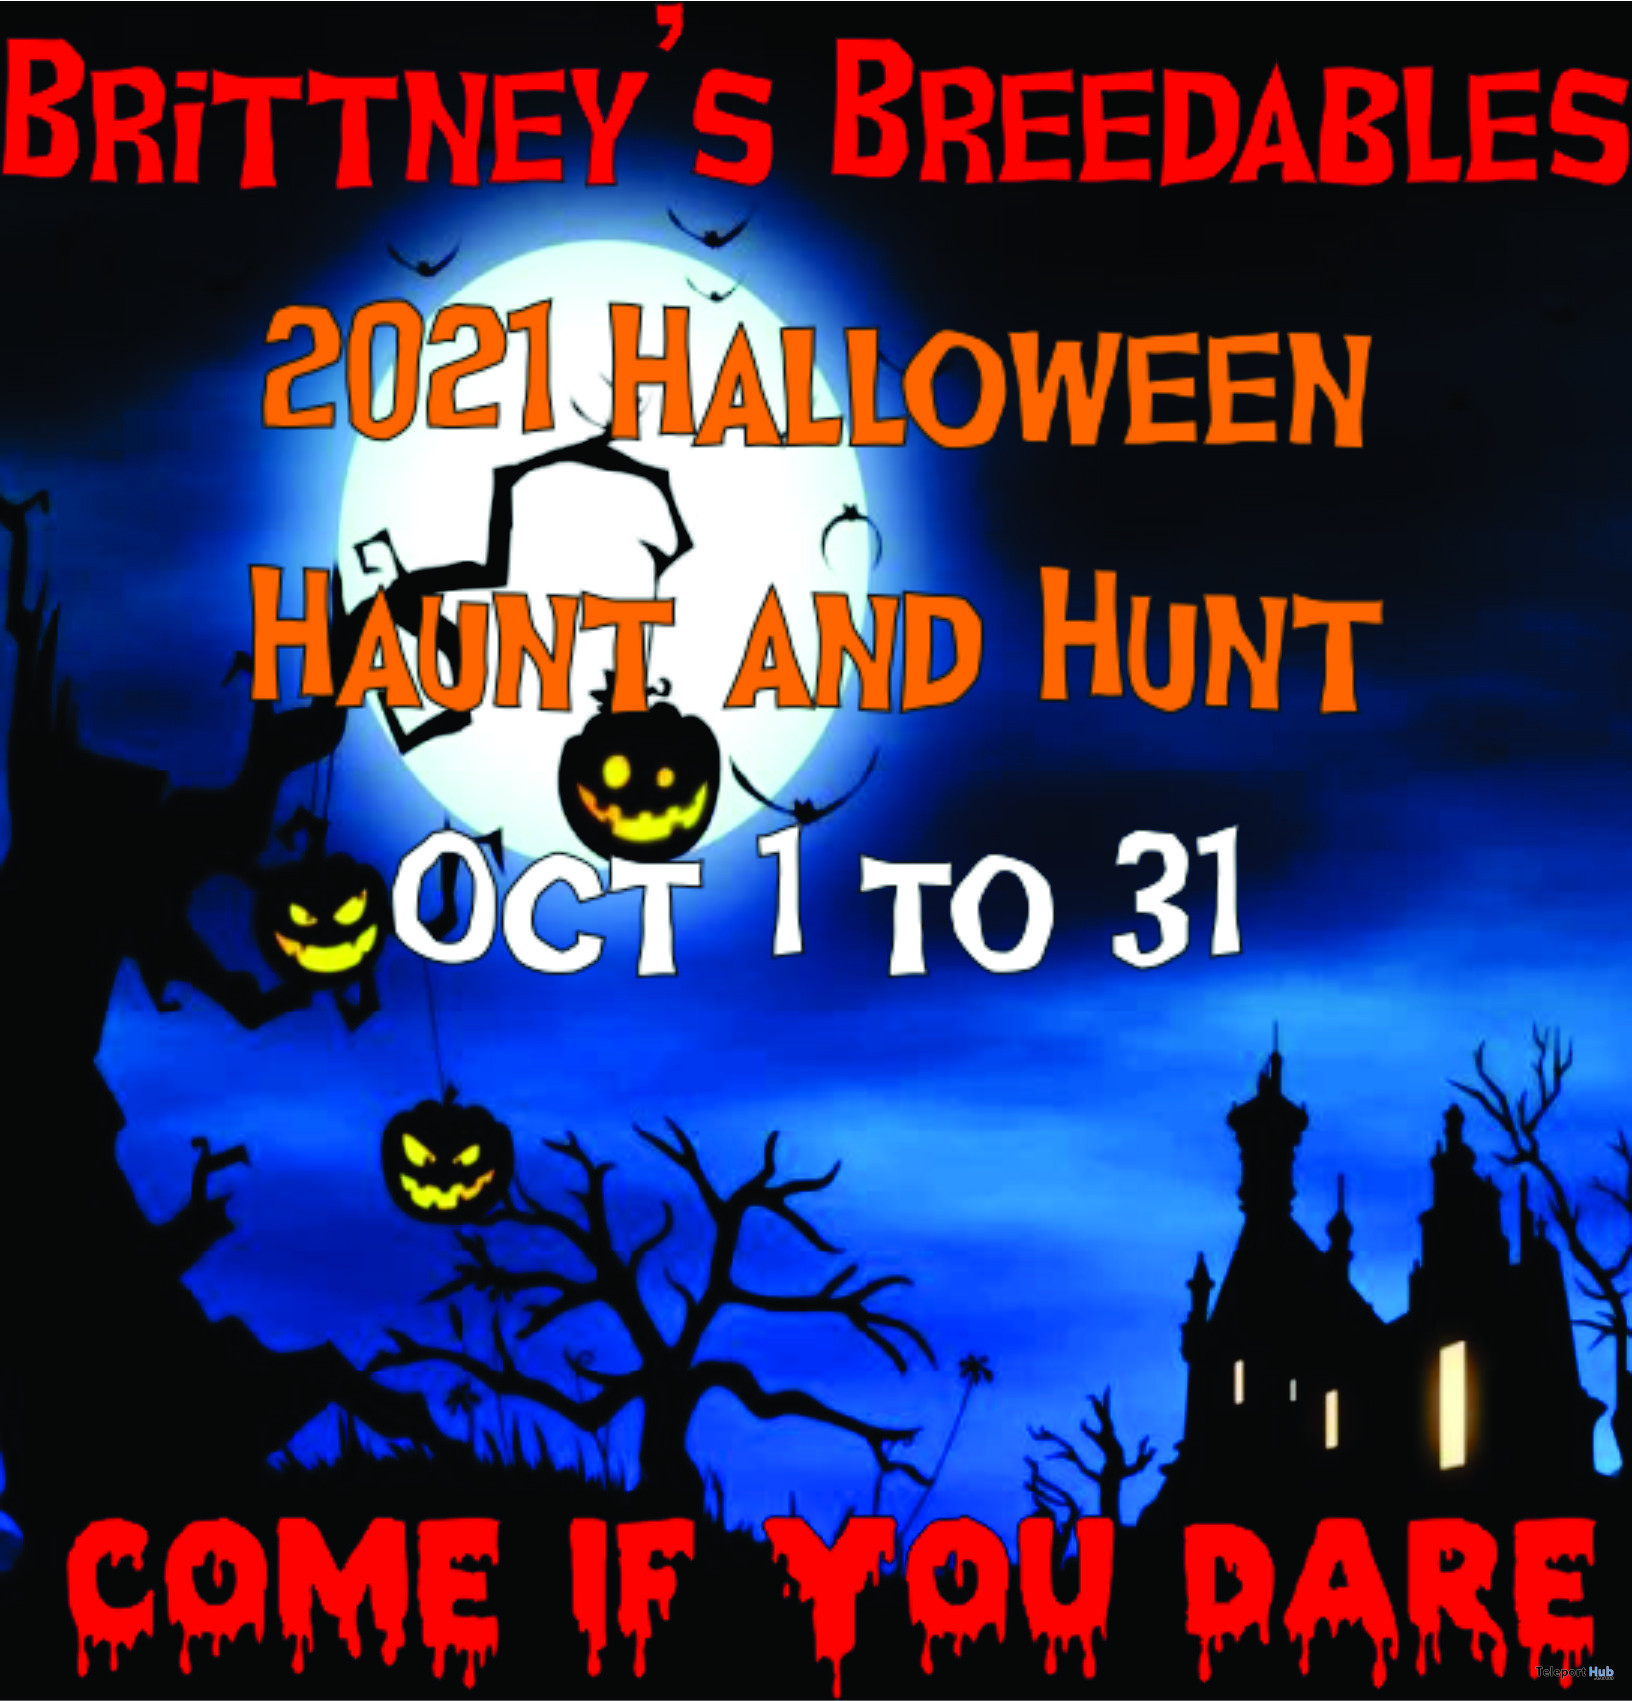 Brittney's Breedables Halloween Haunt & Hunt 2021 - Teleport Hub - teleporthub.com